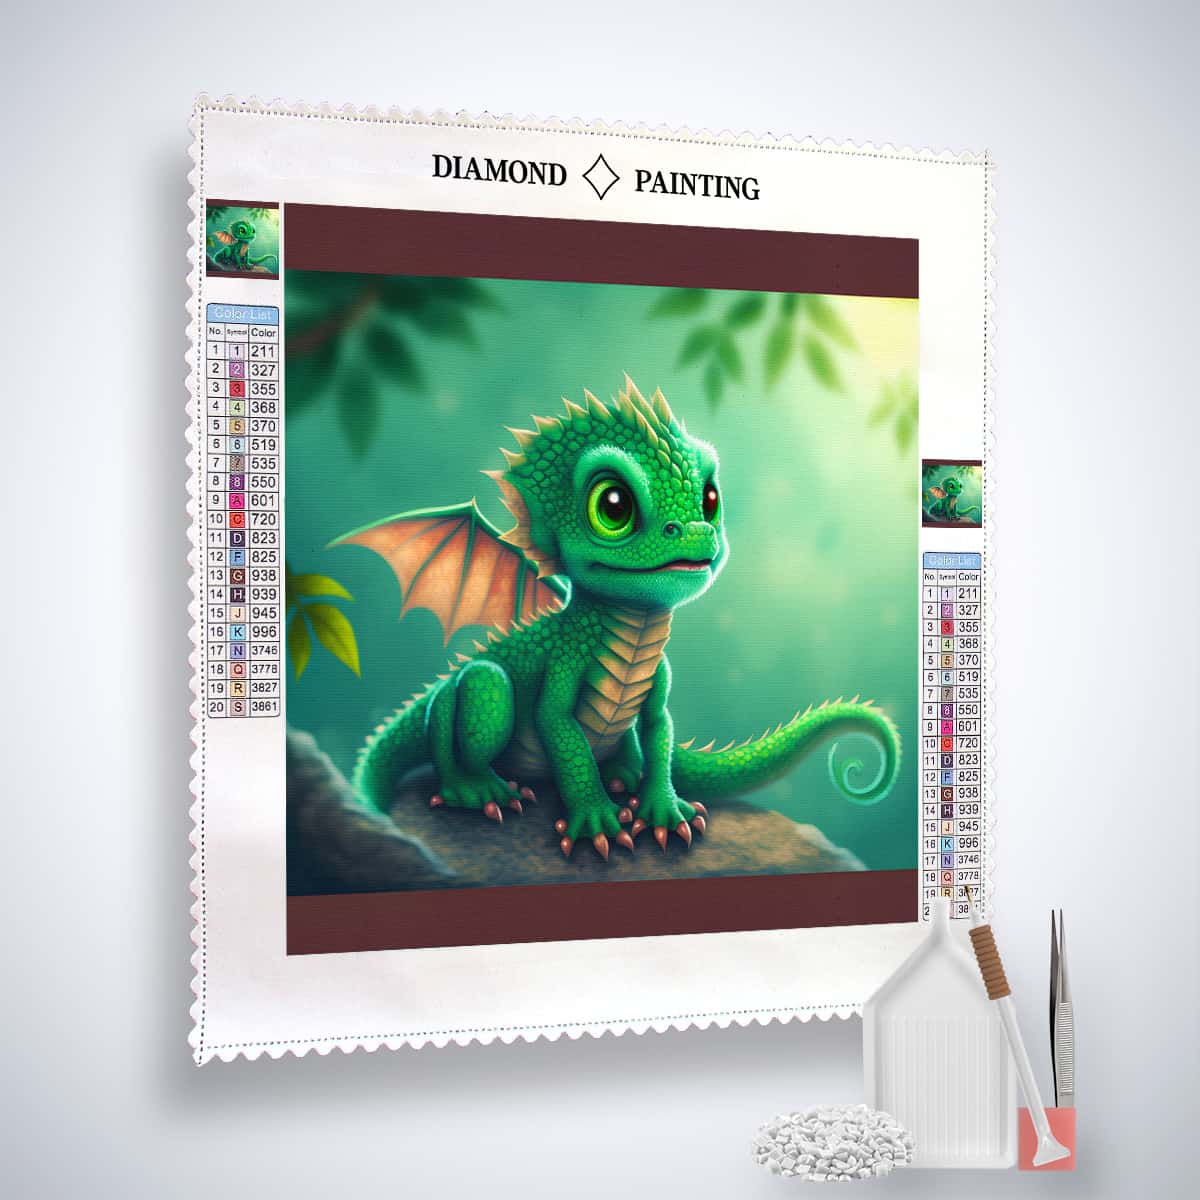 Diamond Painting - Grüner Drache - gedruckt in Ultra-HD - Drache, Fantasy, Neu eingetroffen, Quadratisch